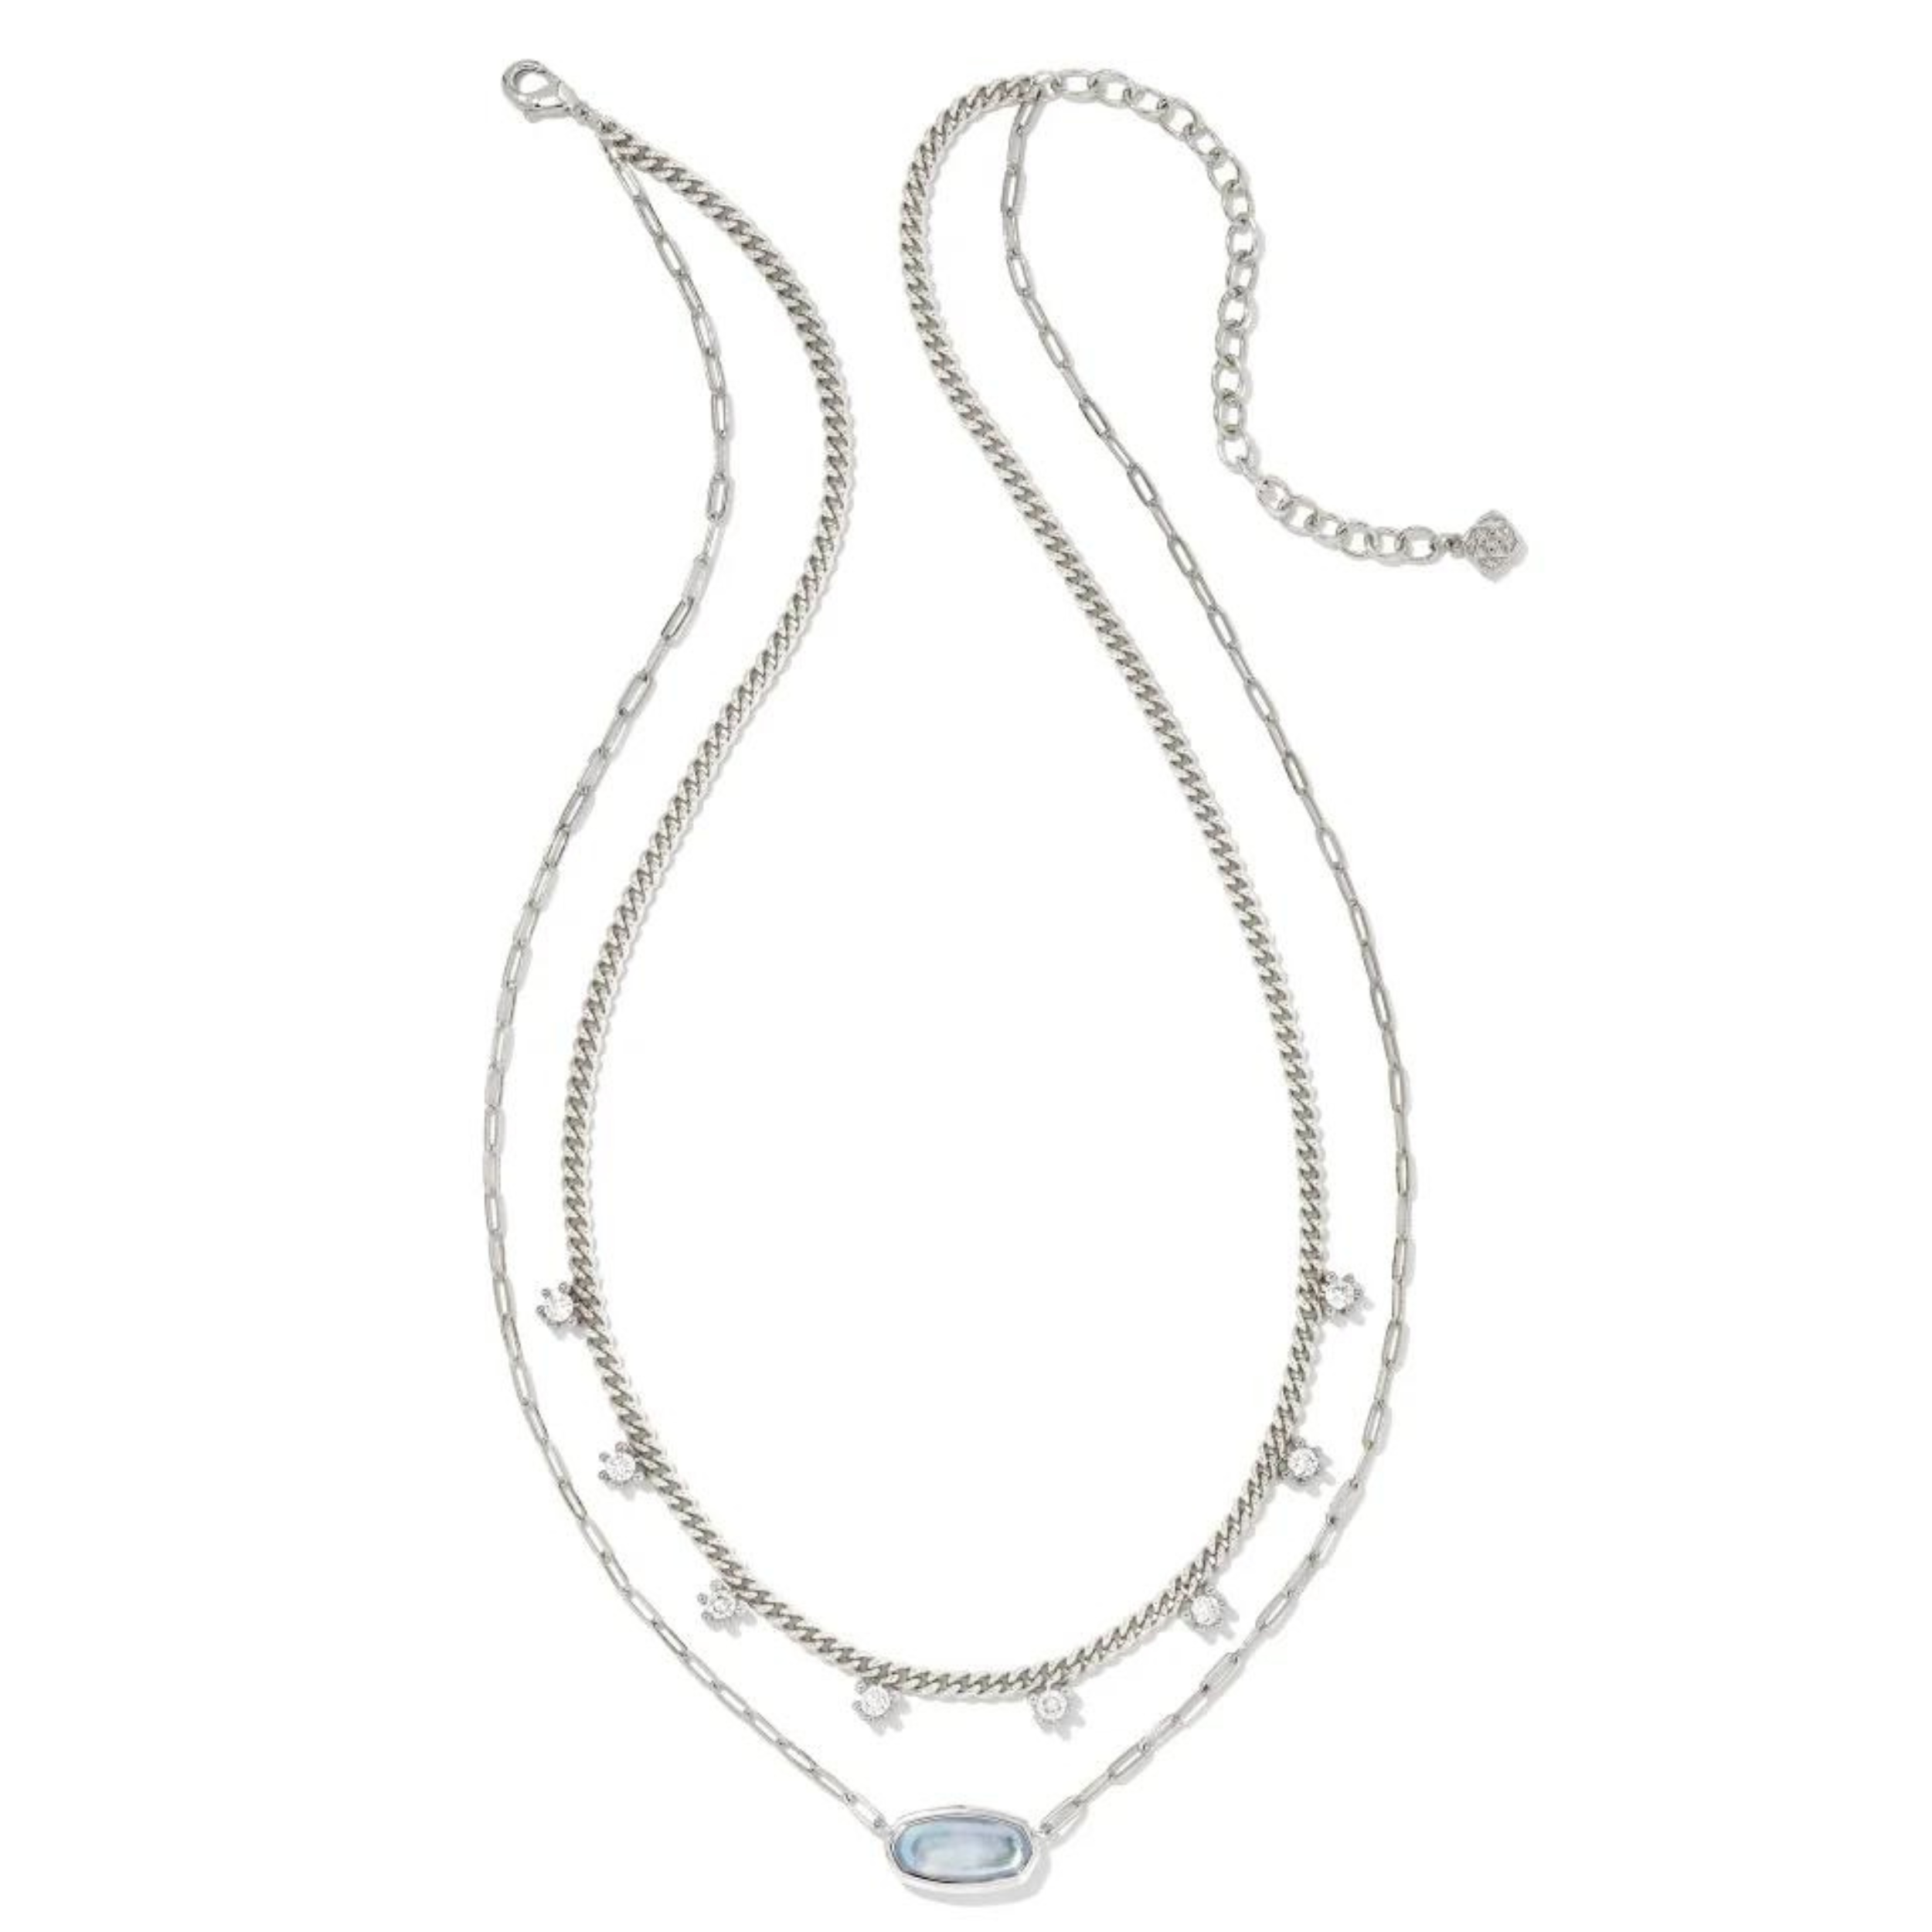 Kendra Scott | Framed Elisa Silver Multi Strand Necklace in Light Sky Blue Illusion - Giddy Up Glamour Boutique